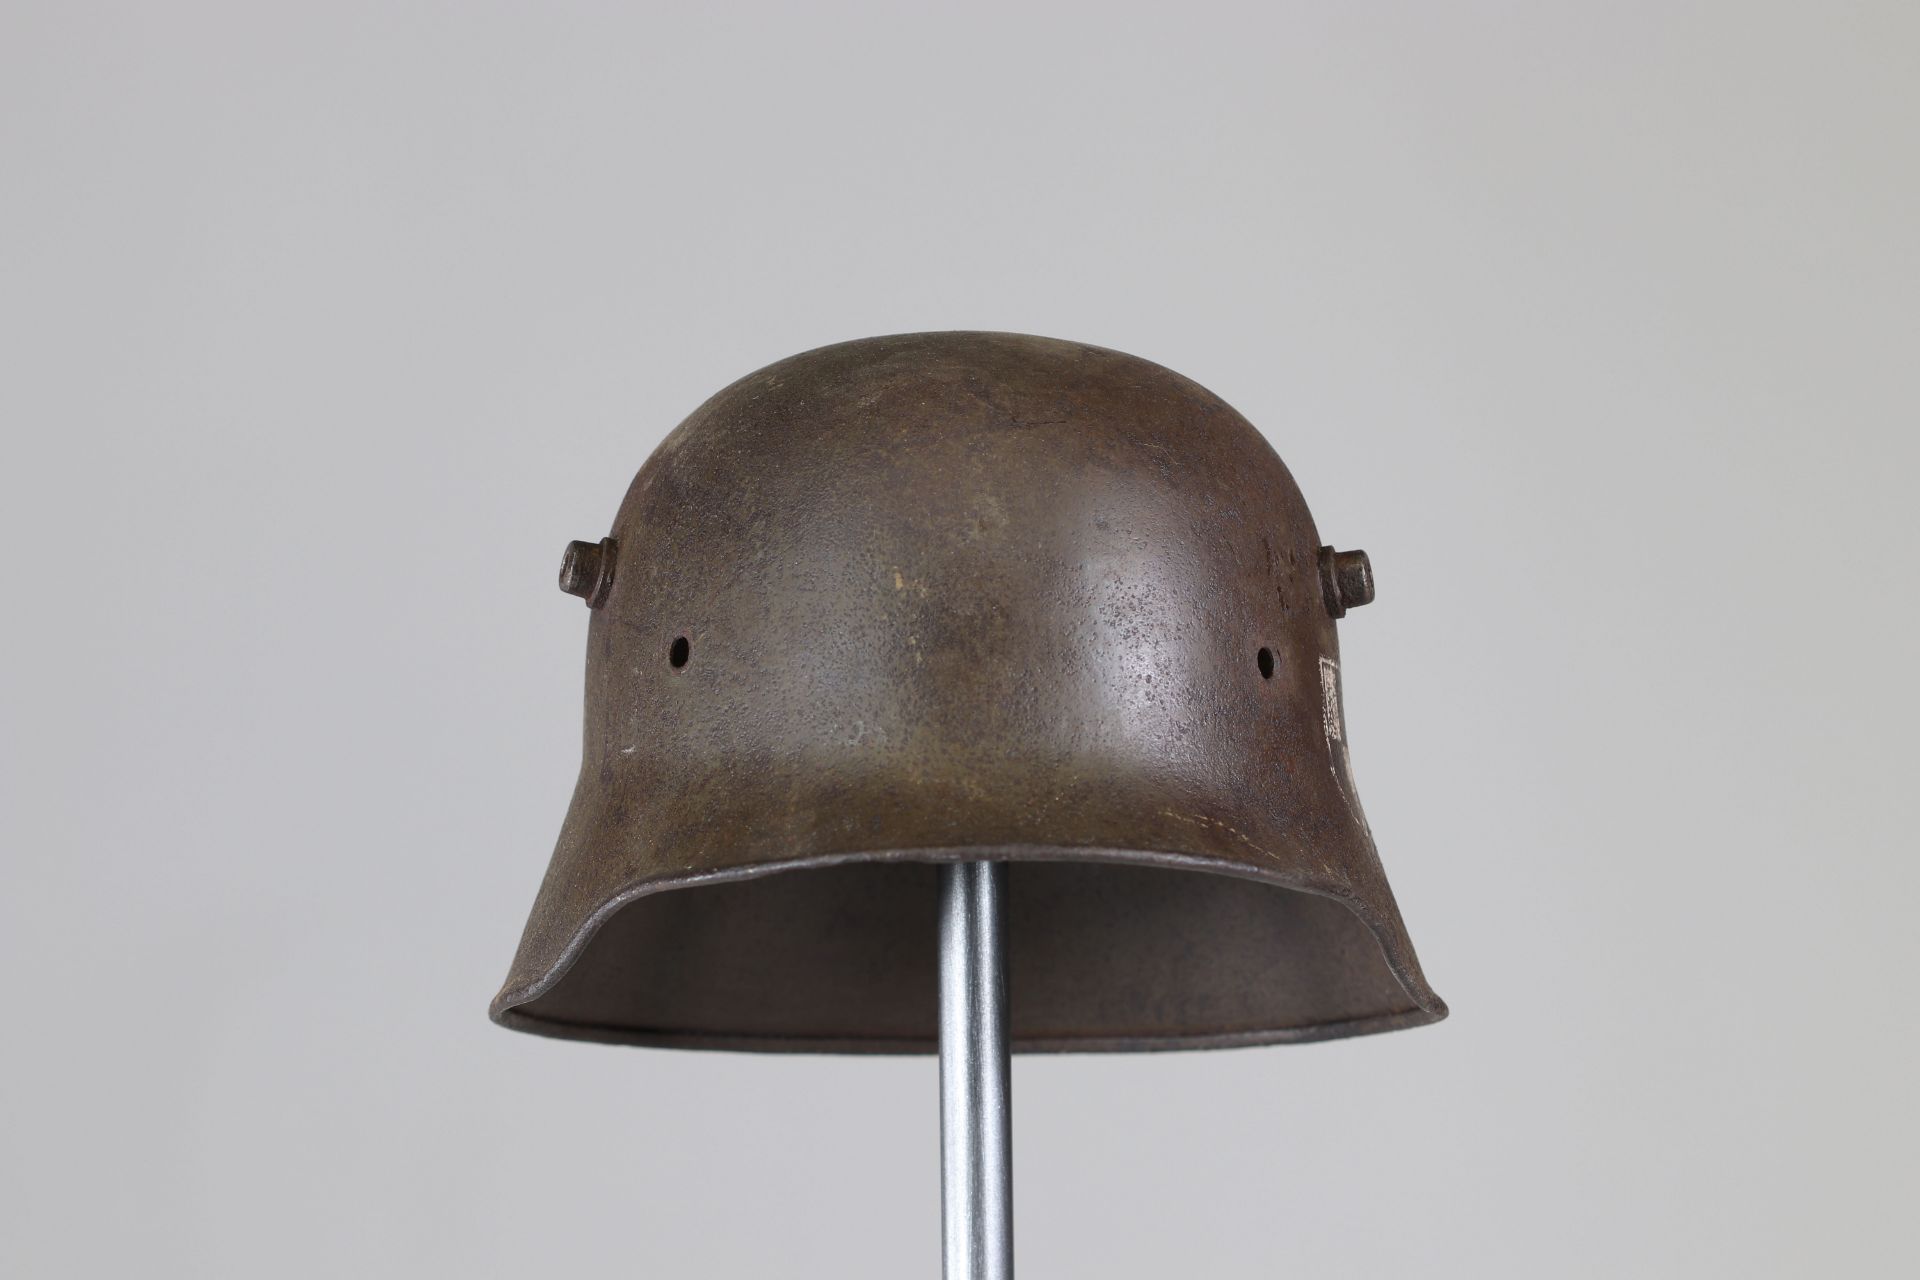 MOD 1918 helmet pan